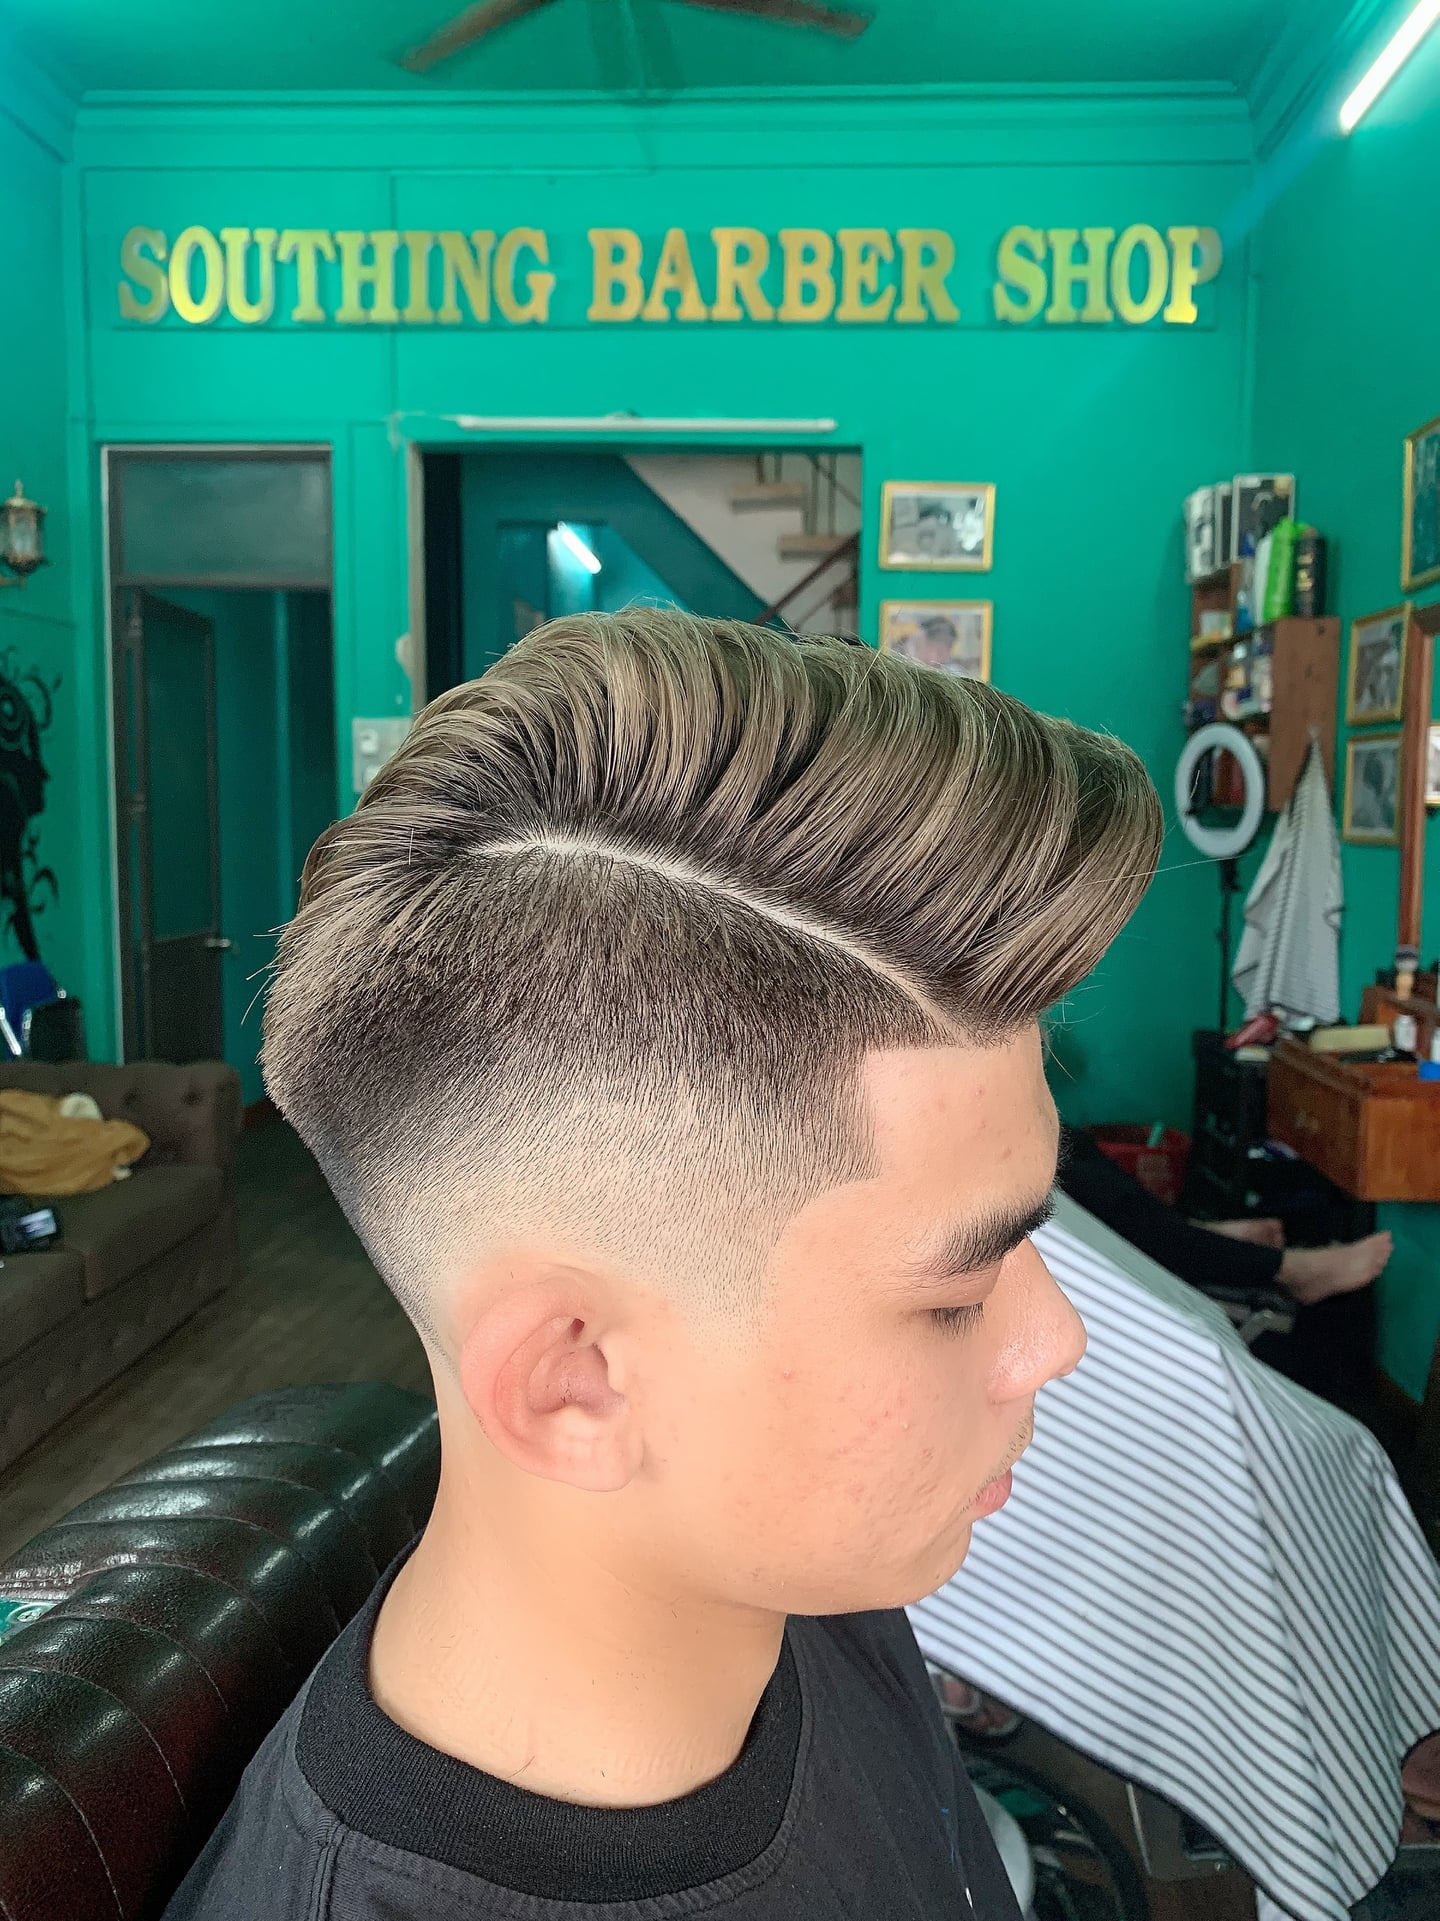 Southung Barber Shop ảnh 1